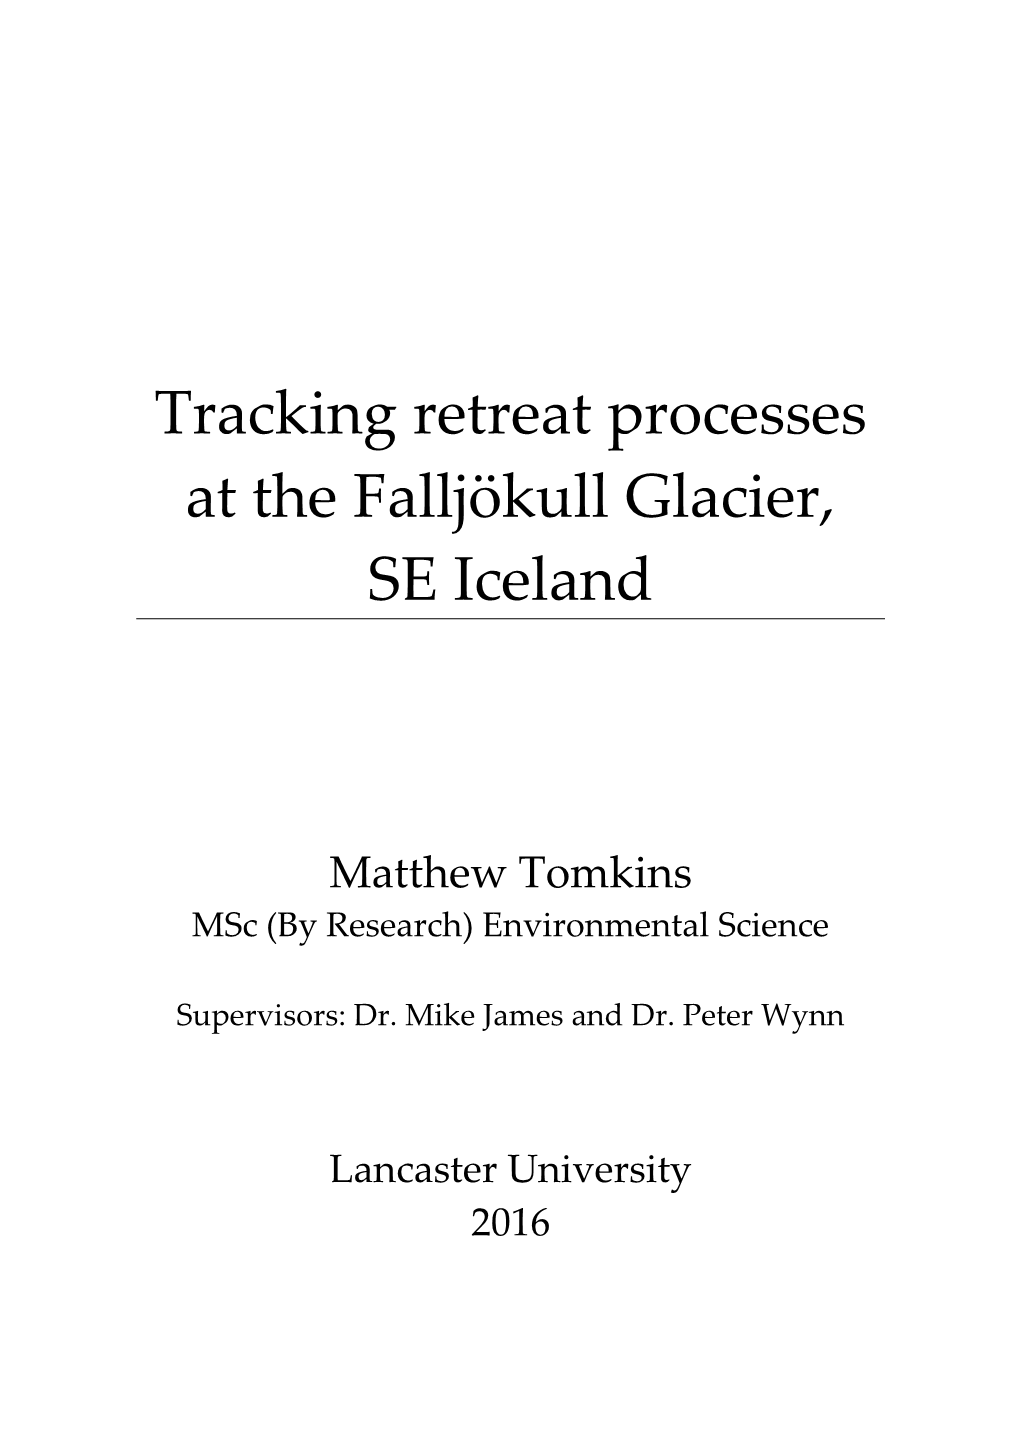 Tracking Retreat Processes at the Falljökull Glacier, SE Iceland